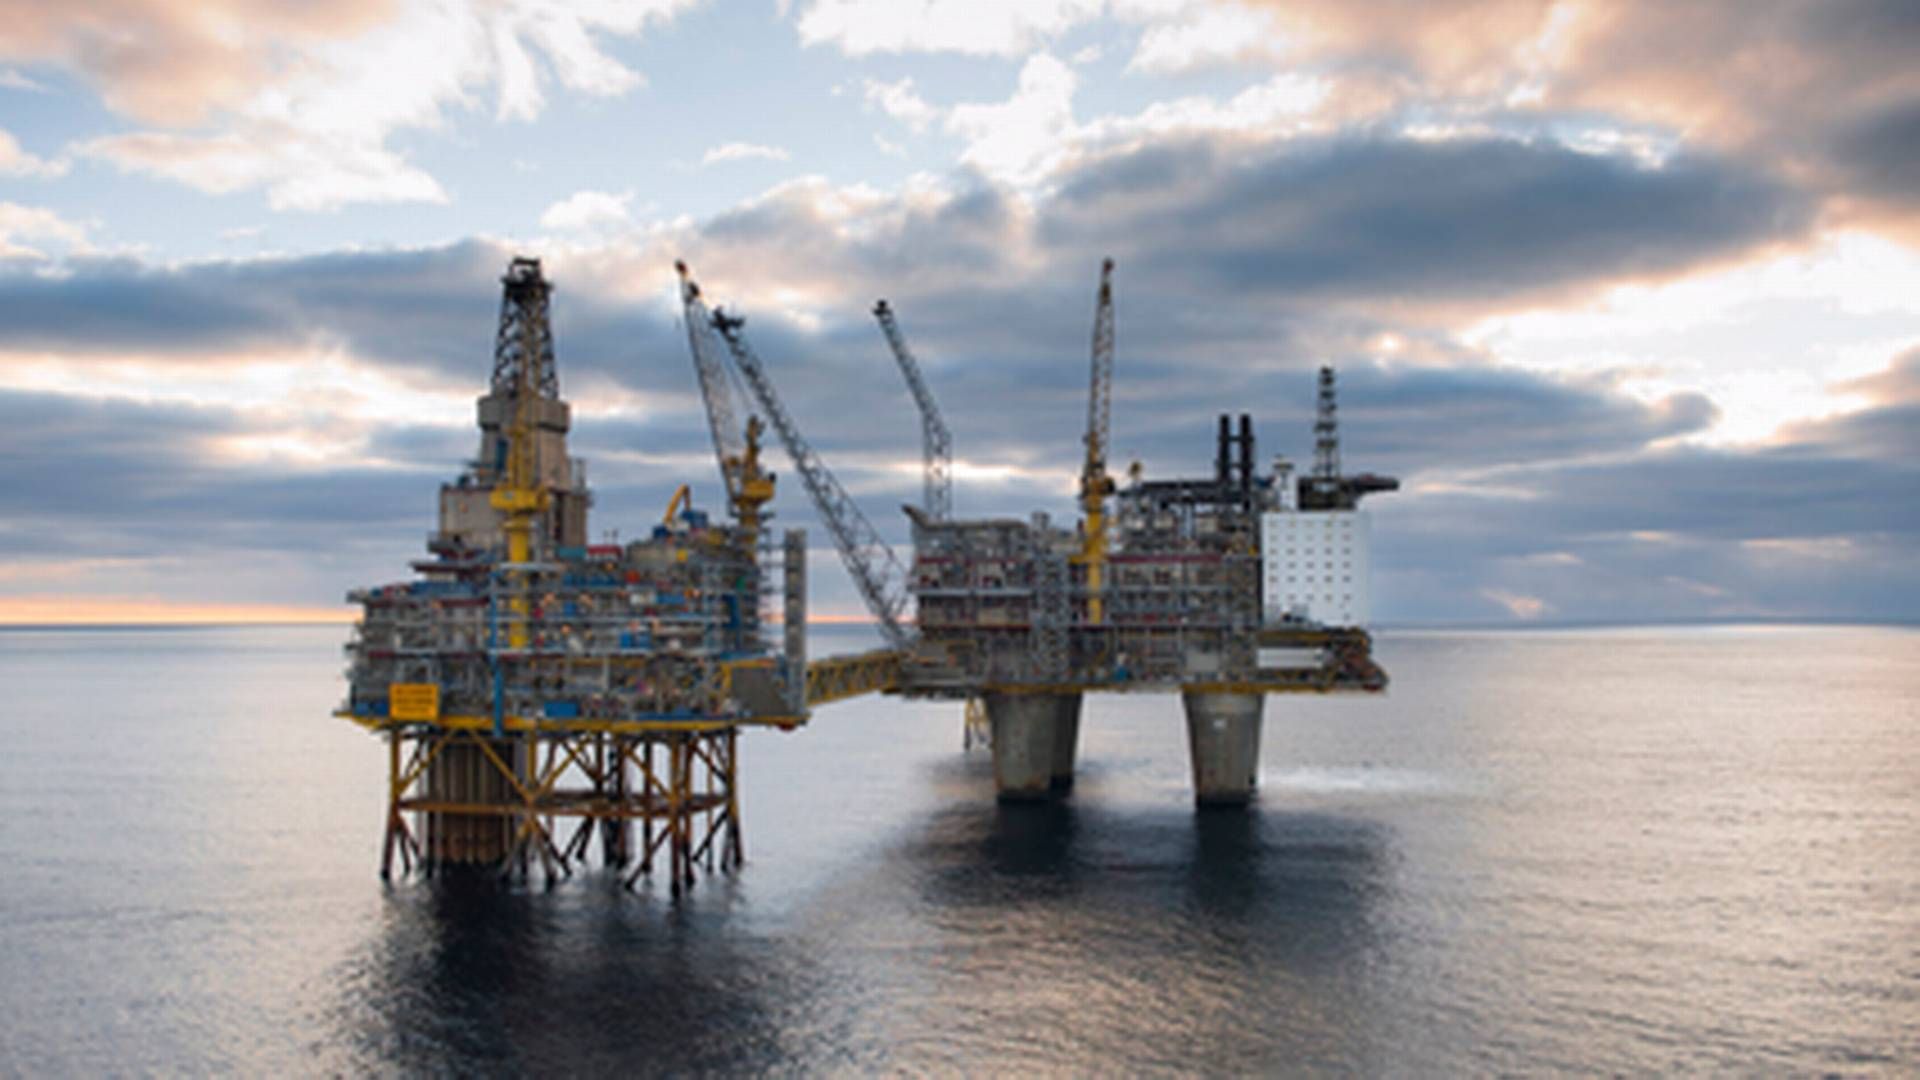 One of Equinor's (then Statoil) offshore oil platforms. | Photo: Øyvind Hagen - Statoil